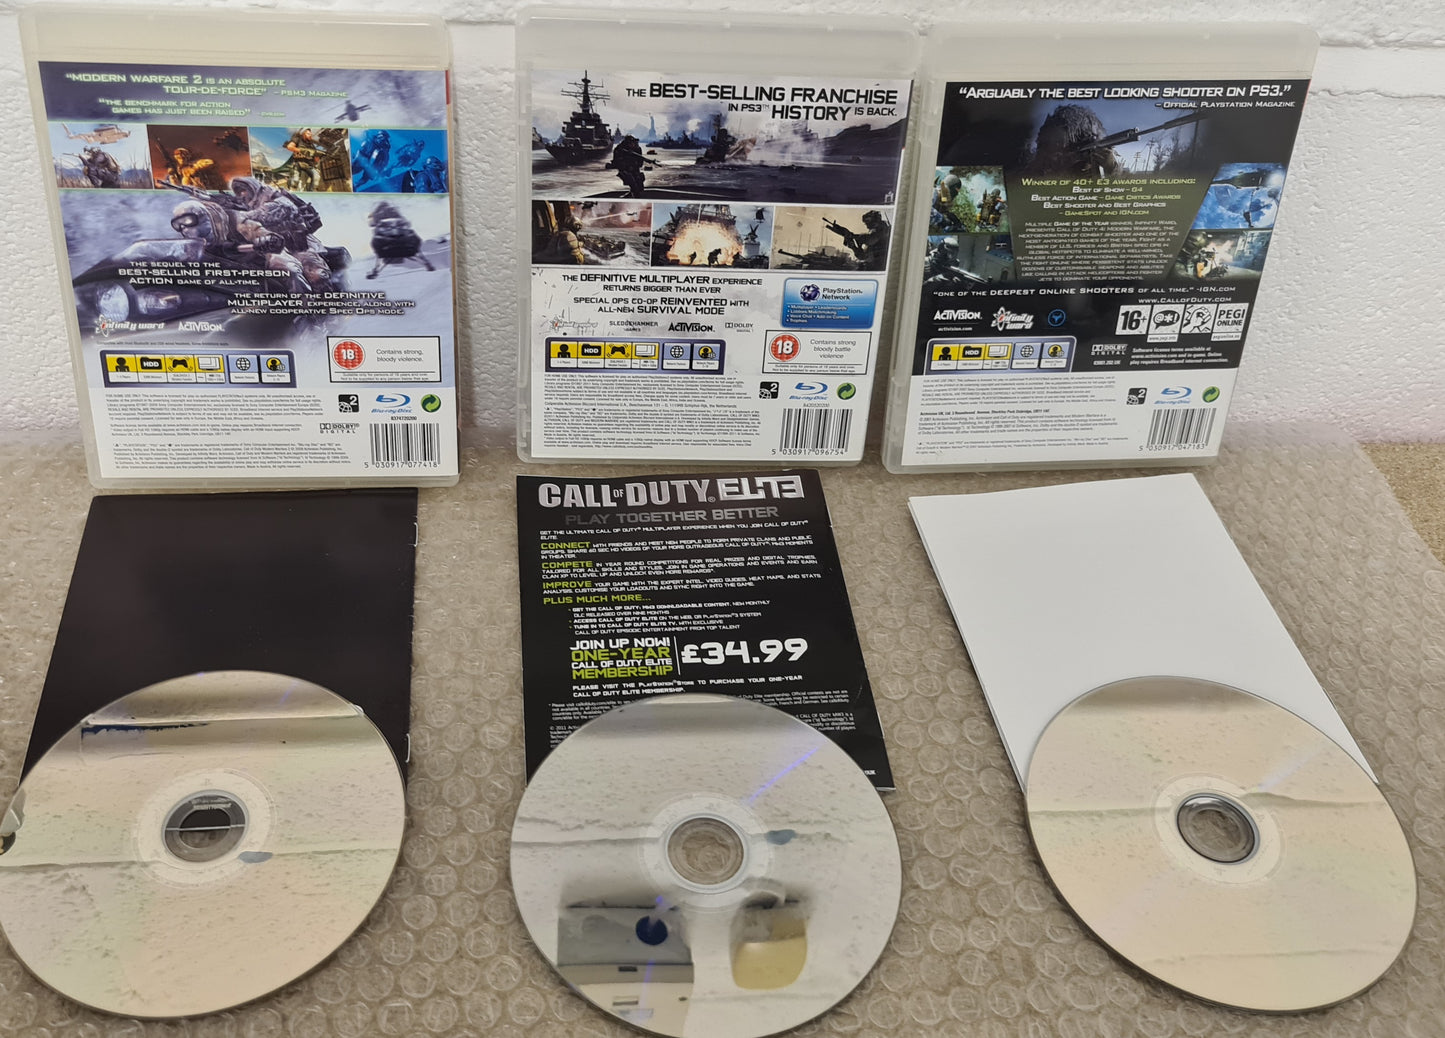 Call of Duty Modern Warfare 1 - 3 Sony Playstation 3 (PS3) Game Bundle